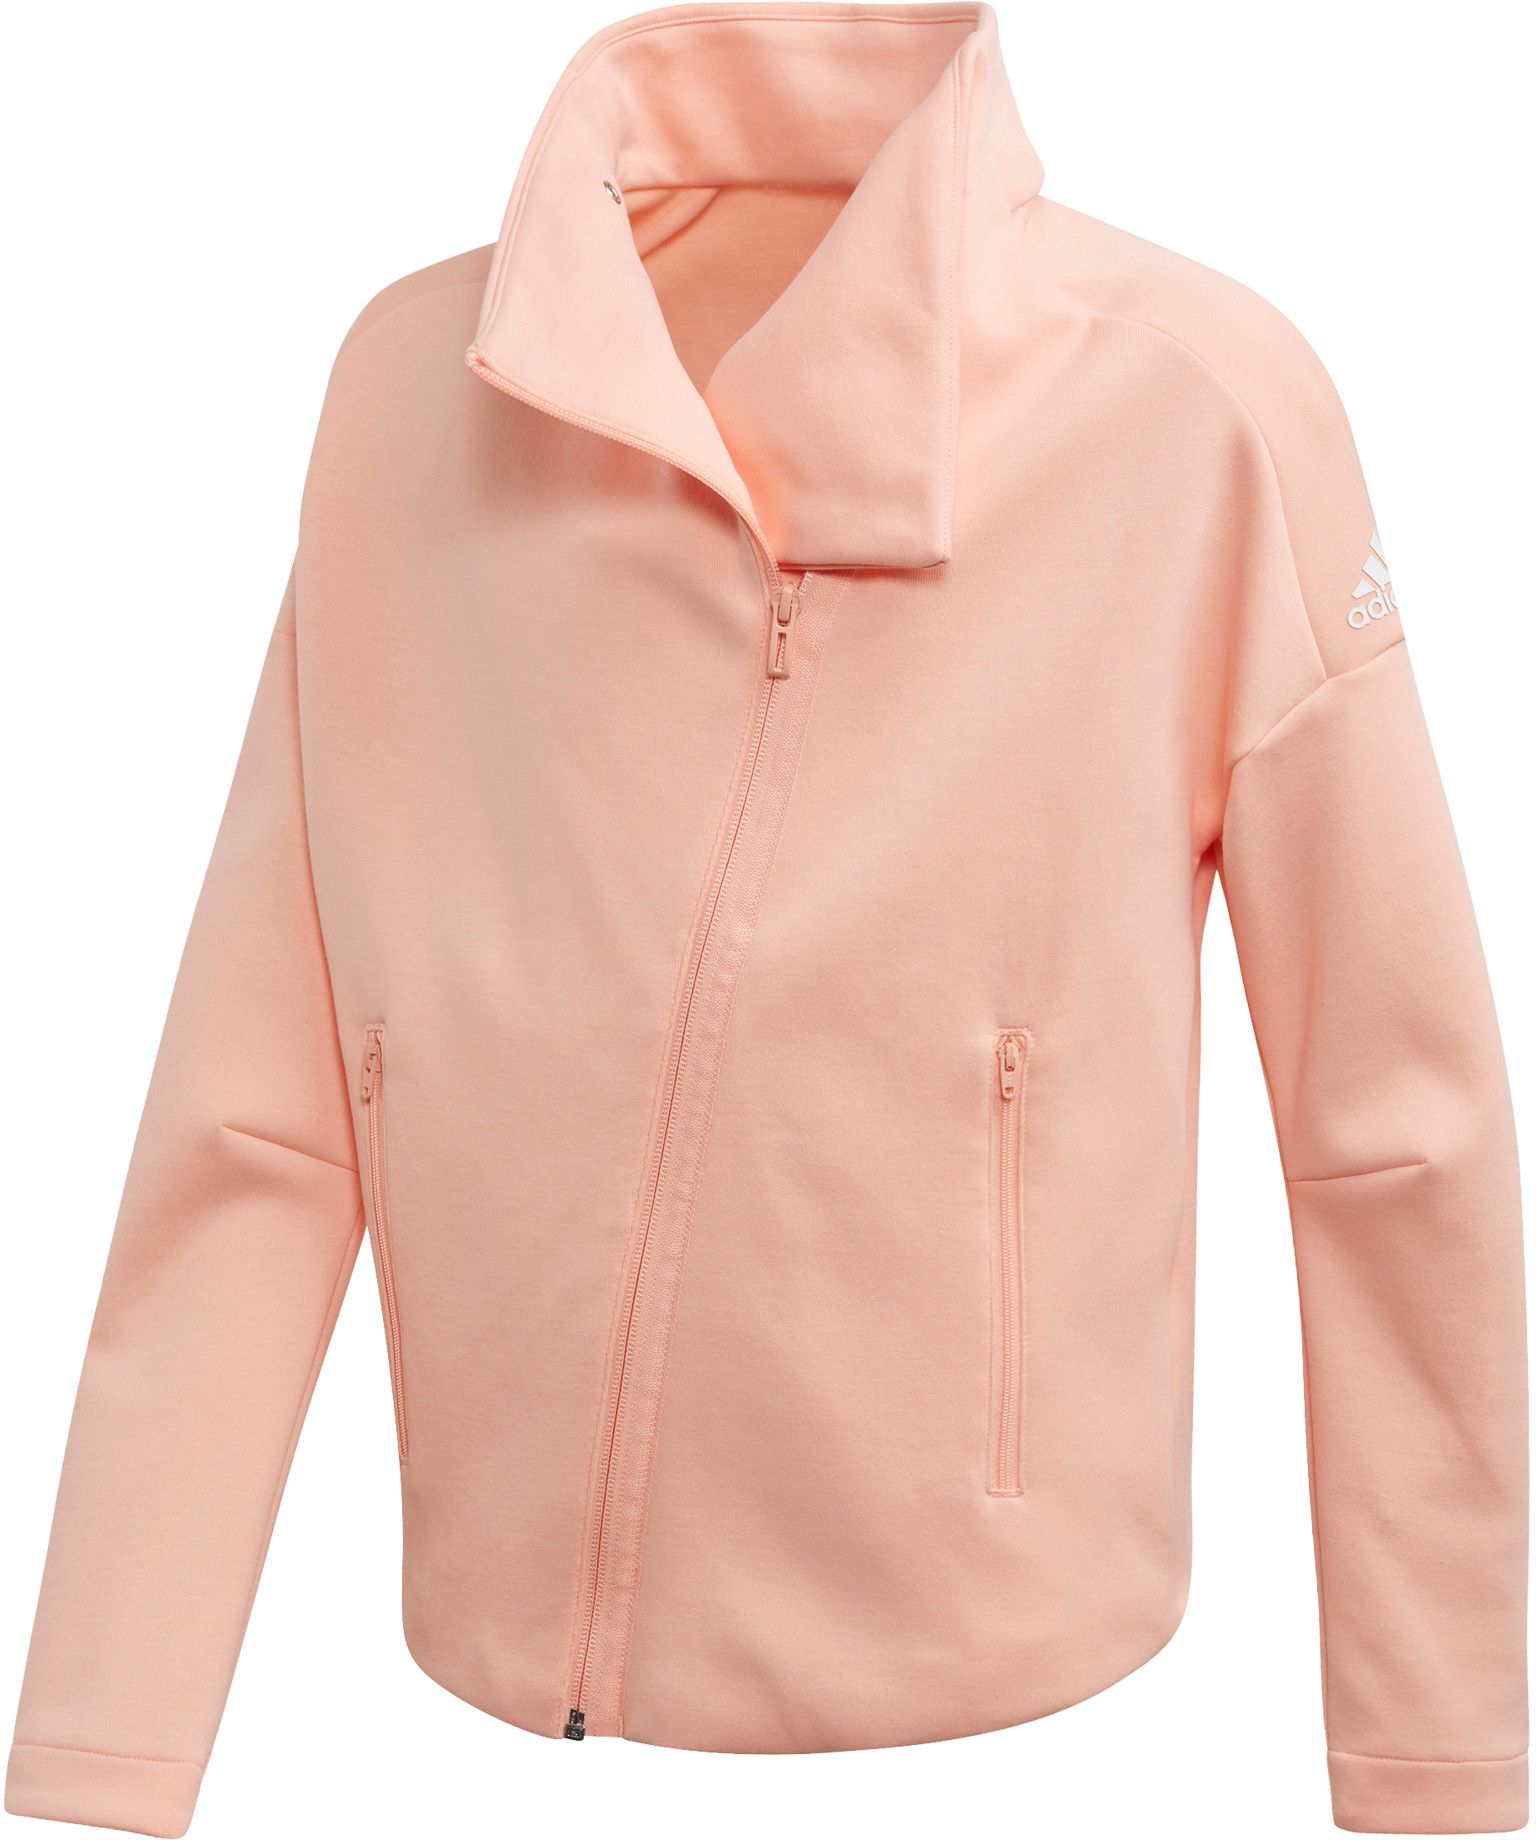 pink adidas jacket womens